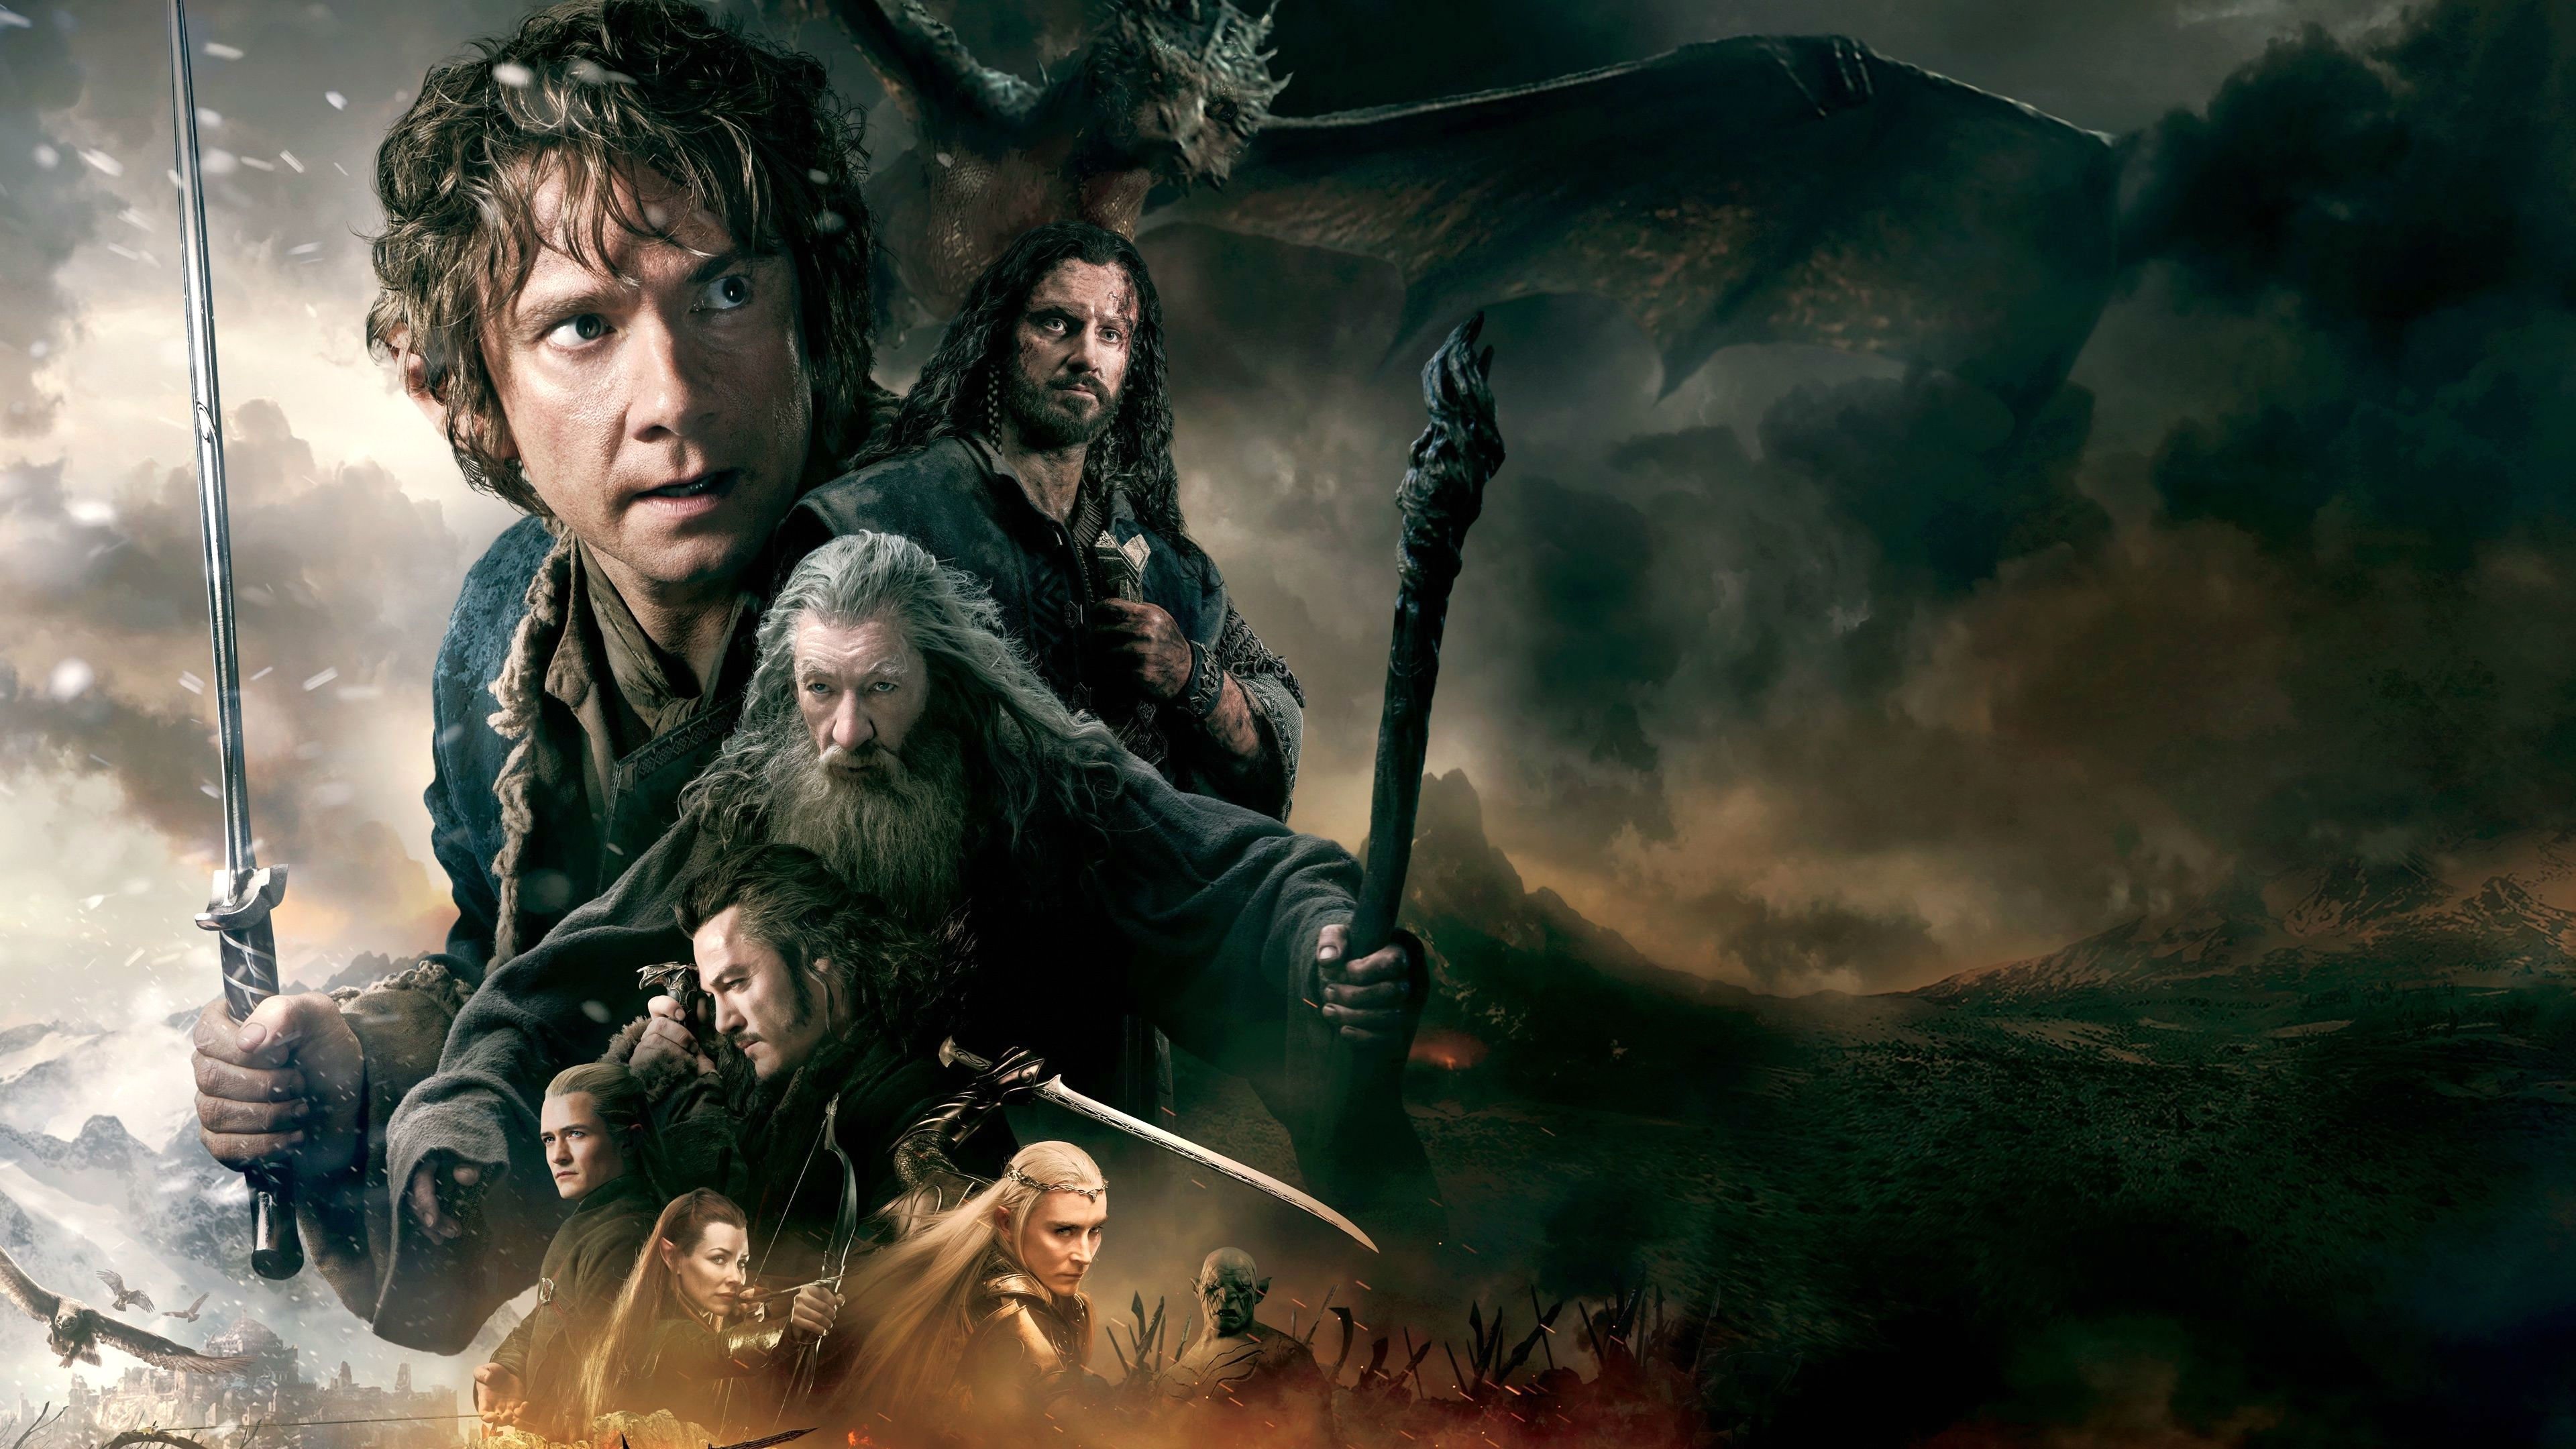 Bilbo Baggins character, Battle scenes, Fantasy adventure, Desktop and mobile wallpapers, 3840x2160 4K Desktop